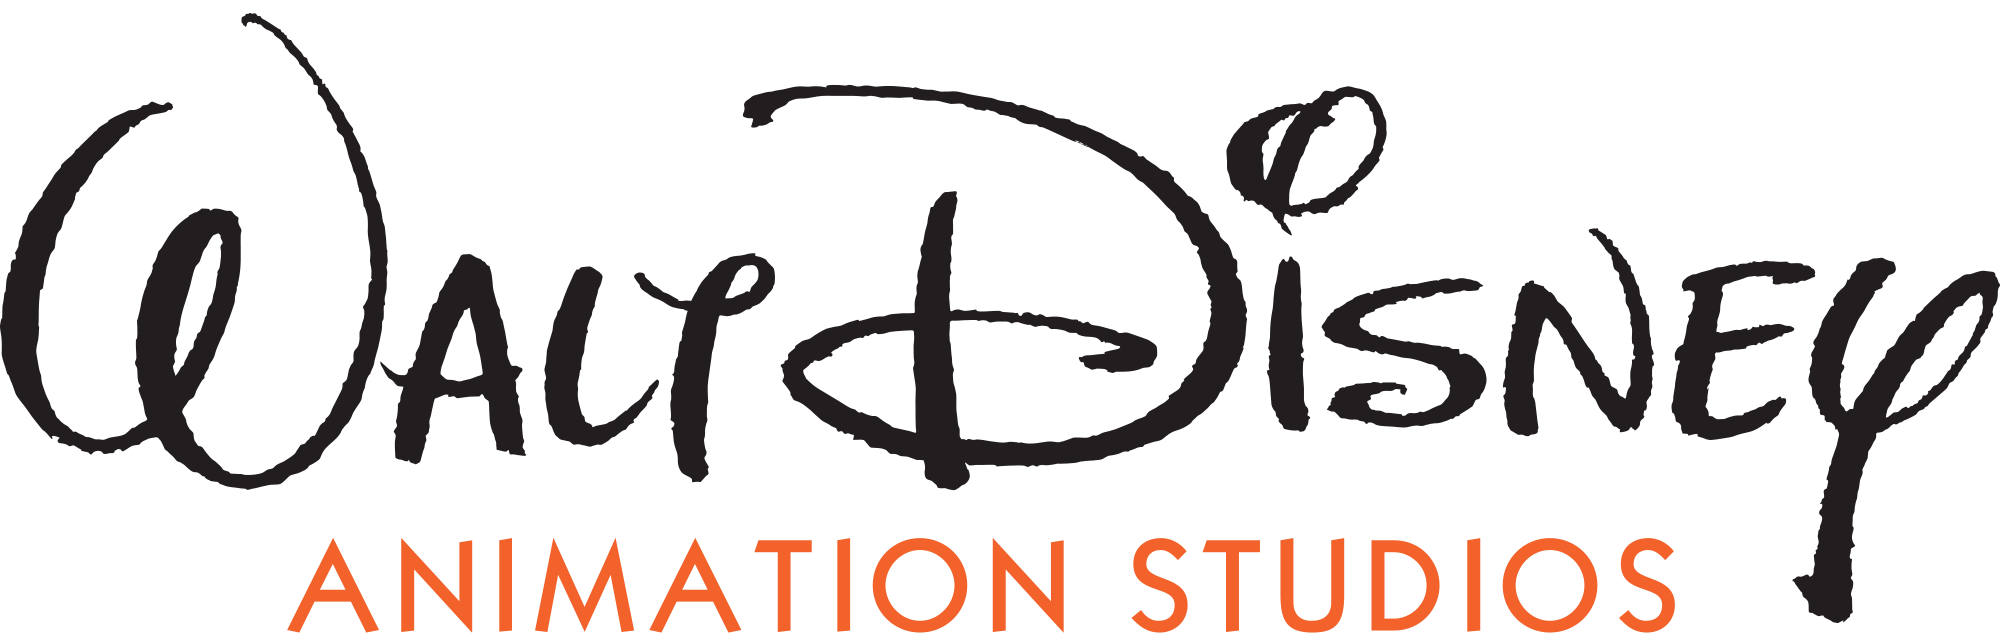 Disney Animation Logo - Walt Disney Animation Studios Logo Animated Logo Video Tools